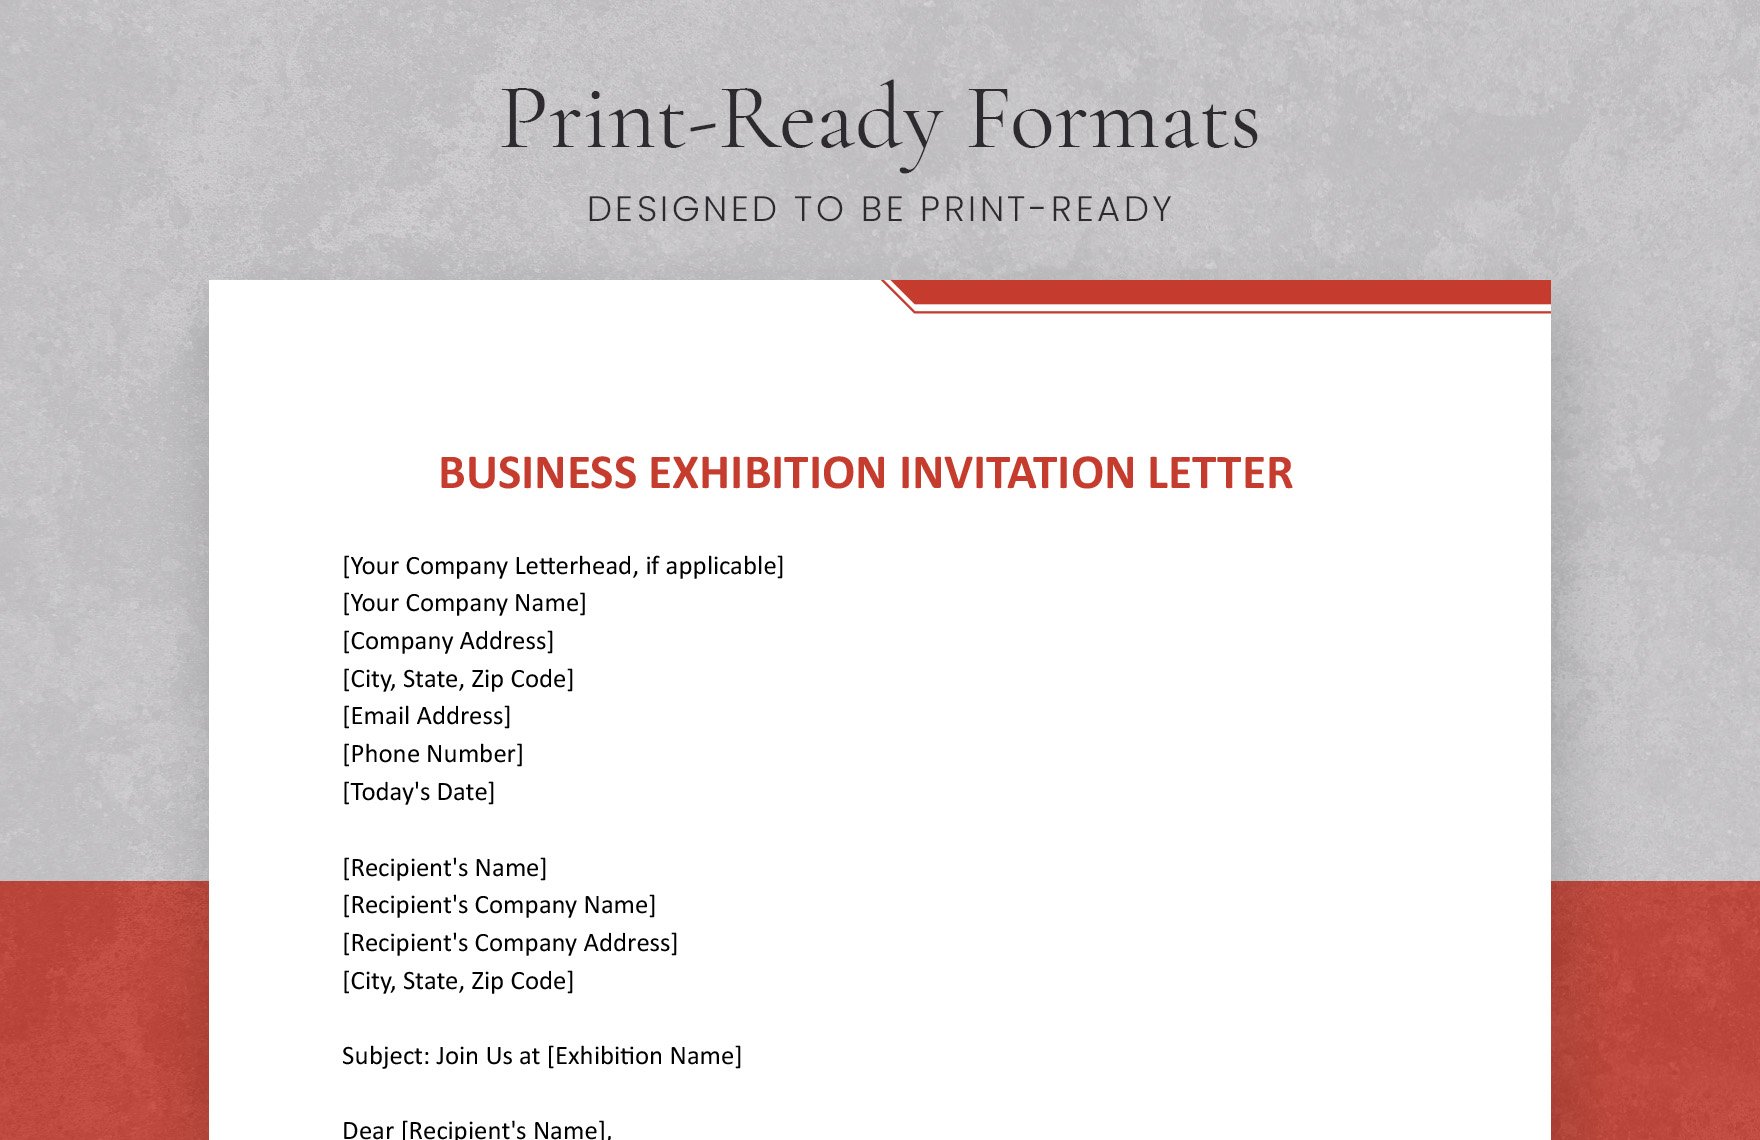 Business Exhibition Invitation Letter